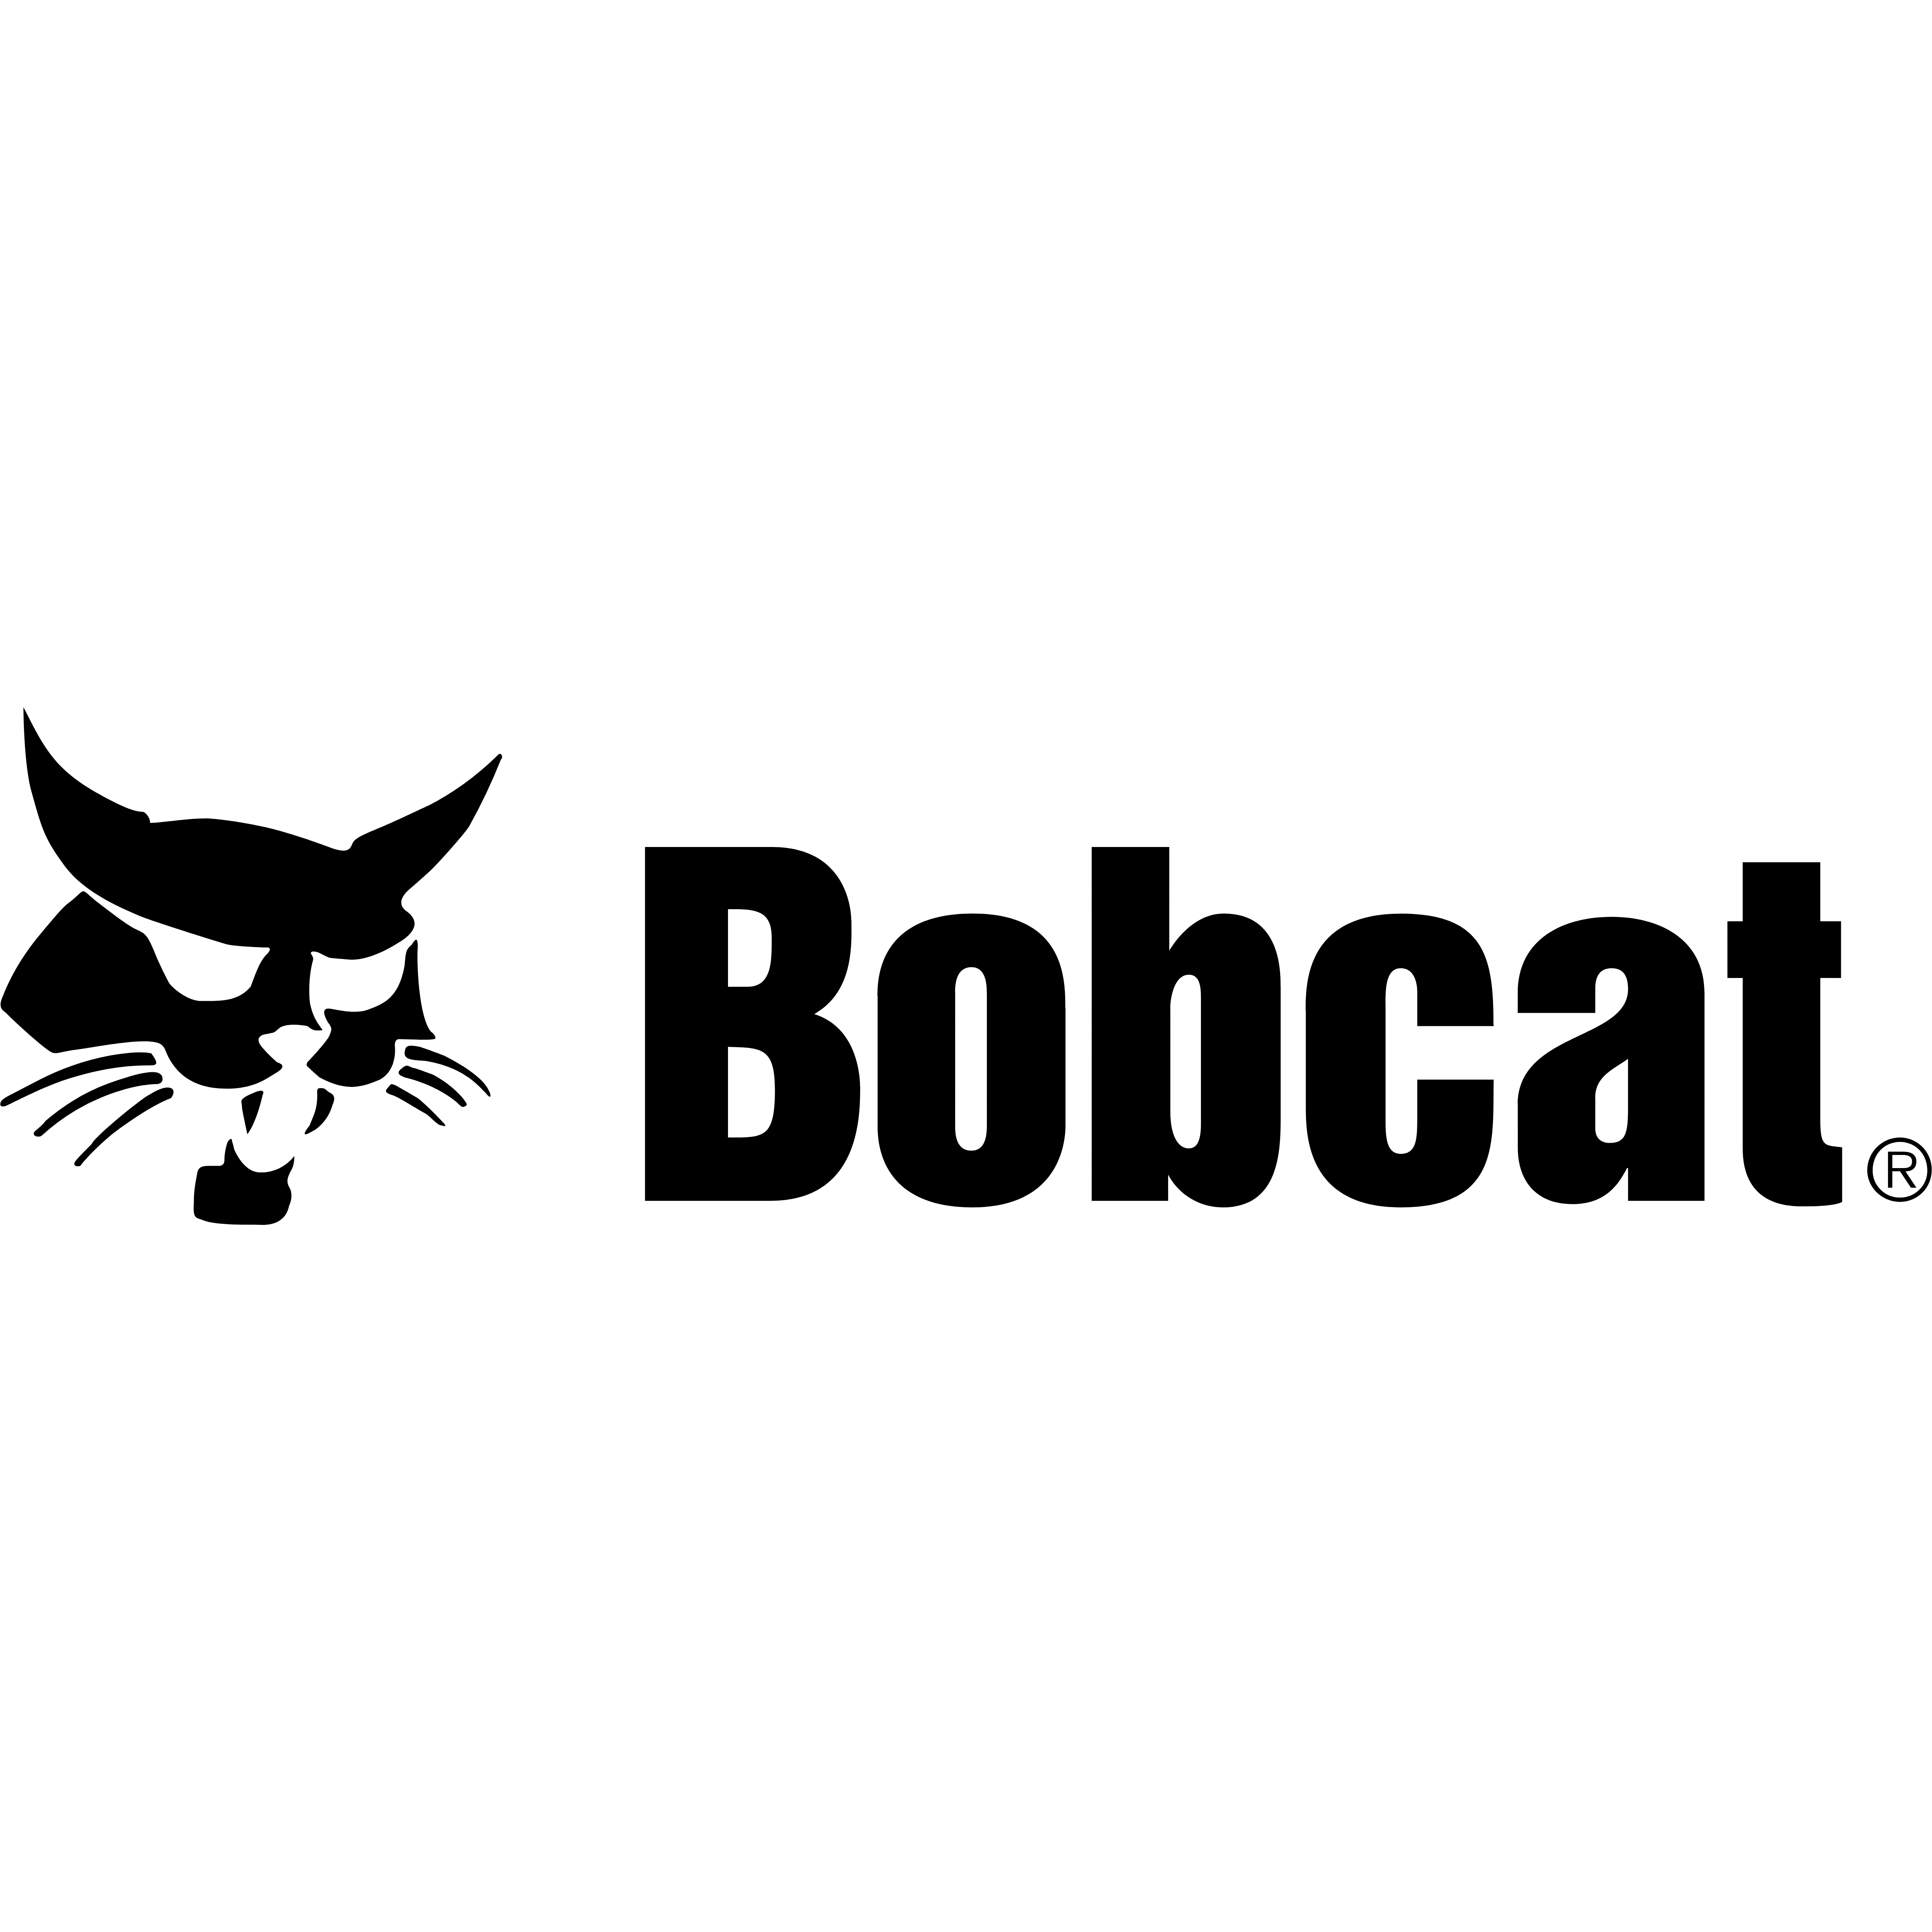 Bobcat of Muskoka